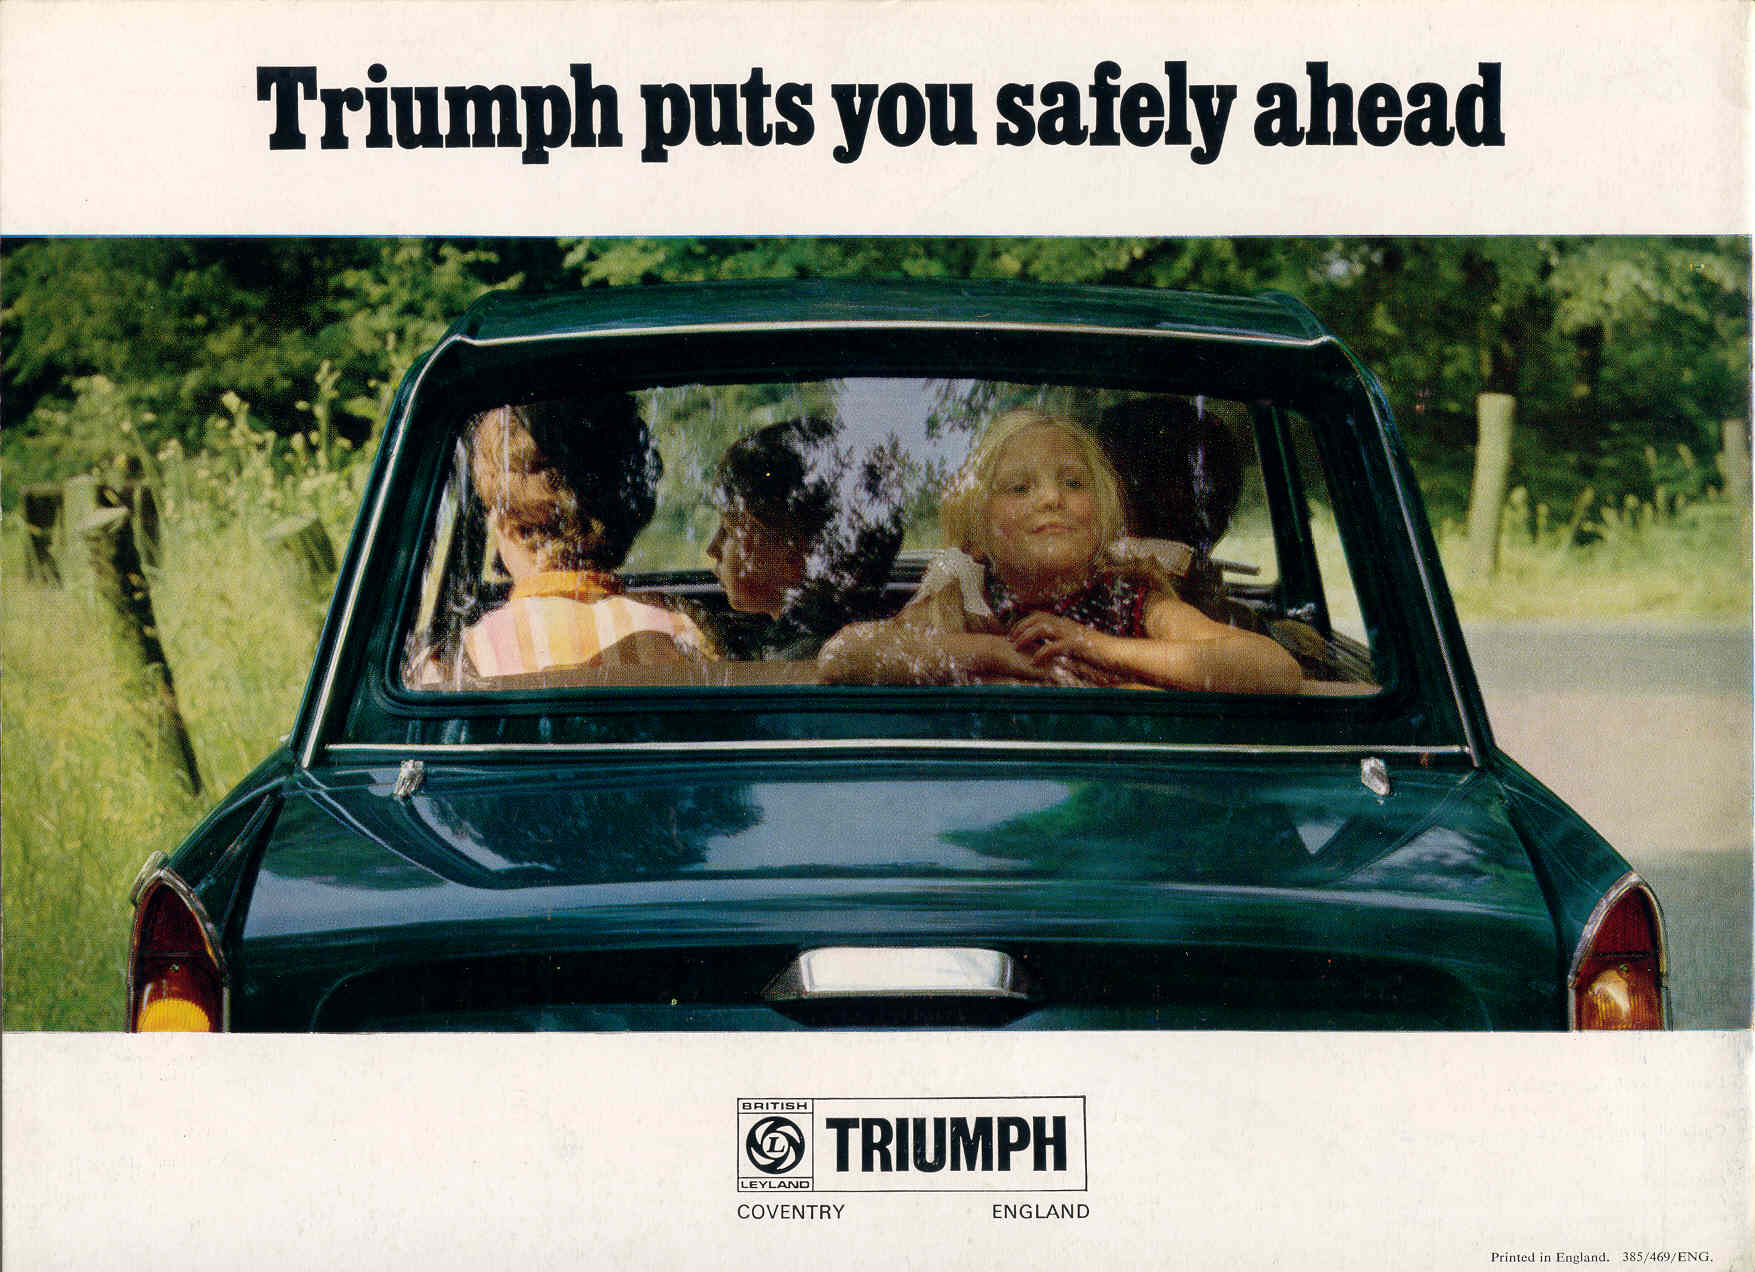 Triumph Herald 13/60 UK!